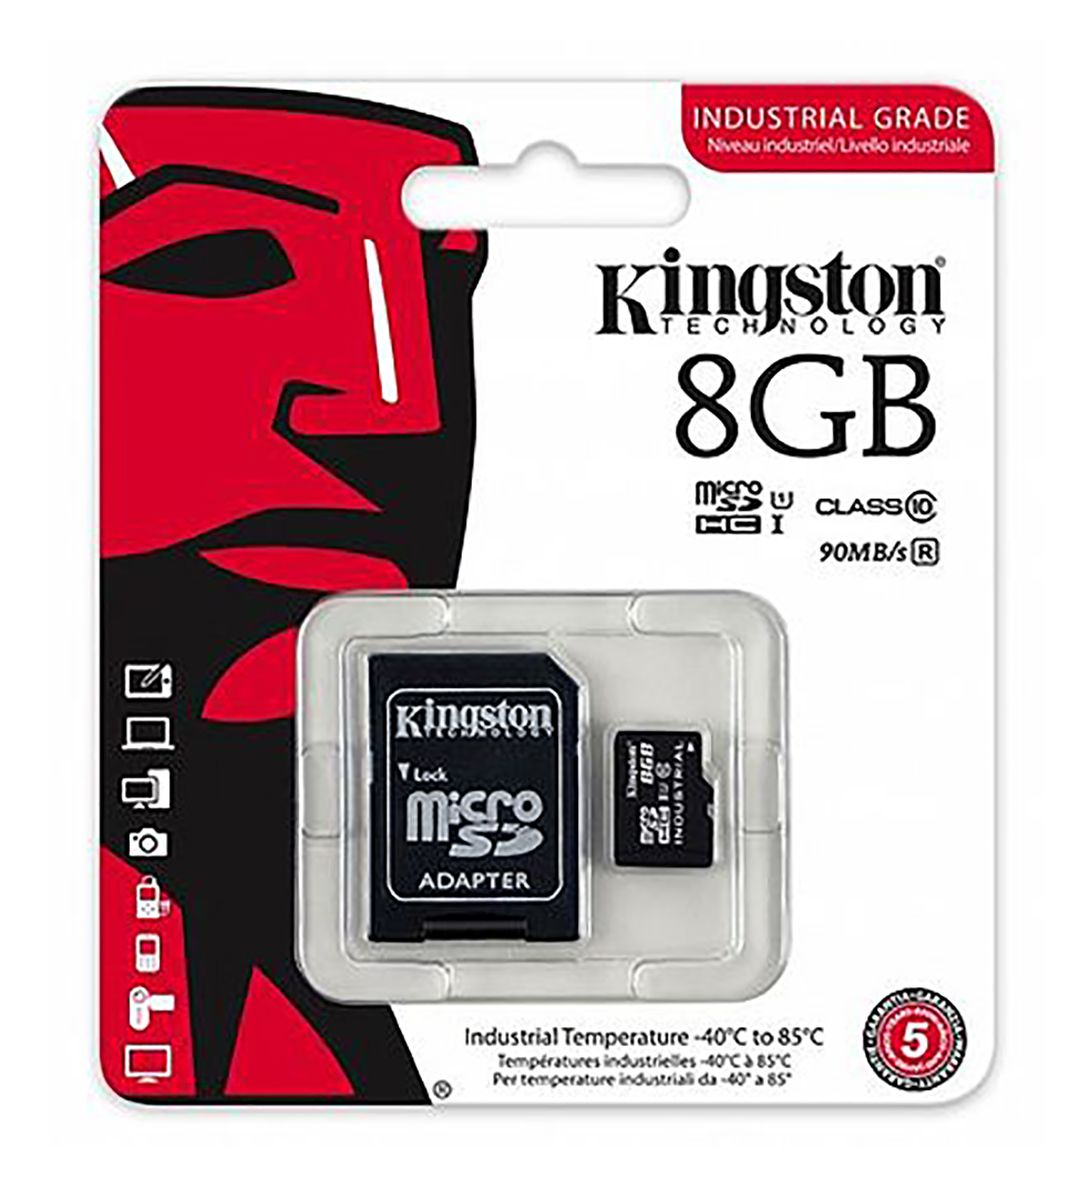 Kingston 8 GB Industrial MicroSDHC Micro SD Card, Class 10, UHS-1 U1